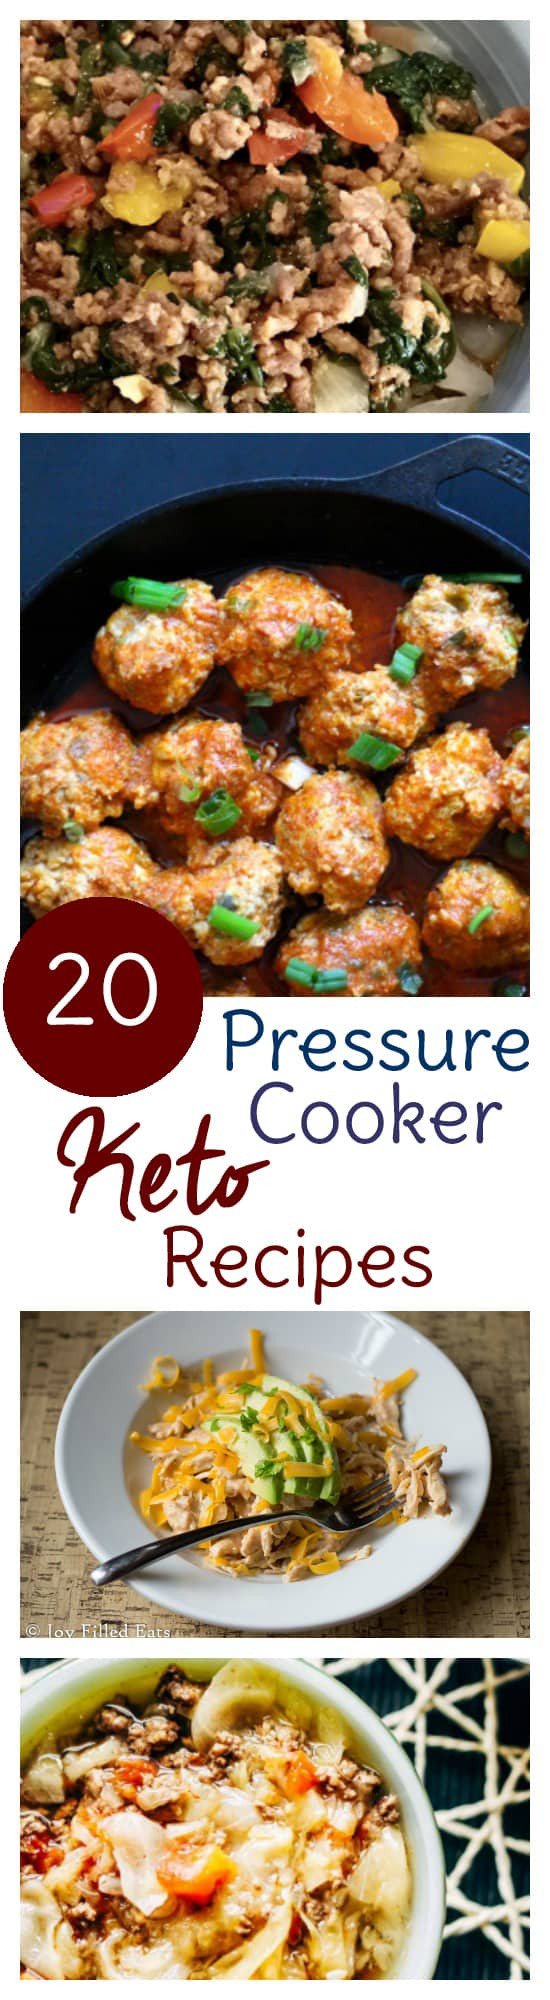 Low Calorie Pressure Cooker Recipes
 20 Keto Pressure Cooker Recipes